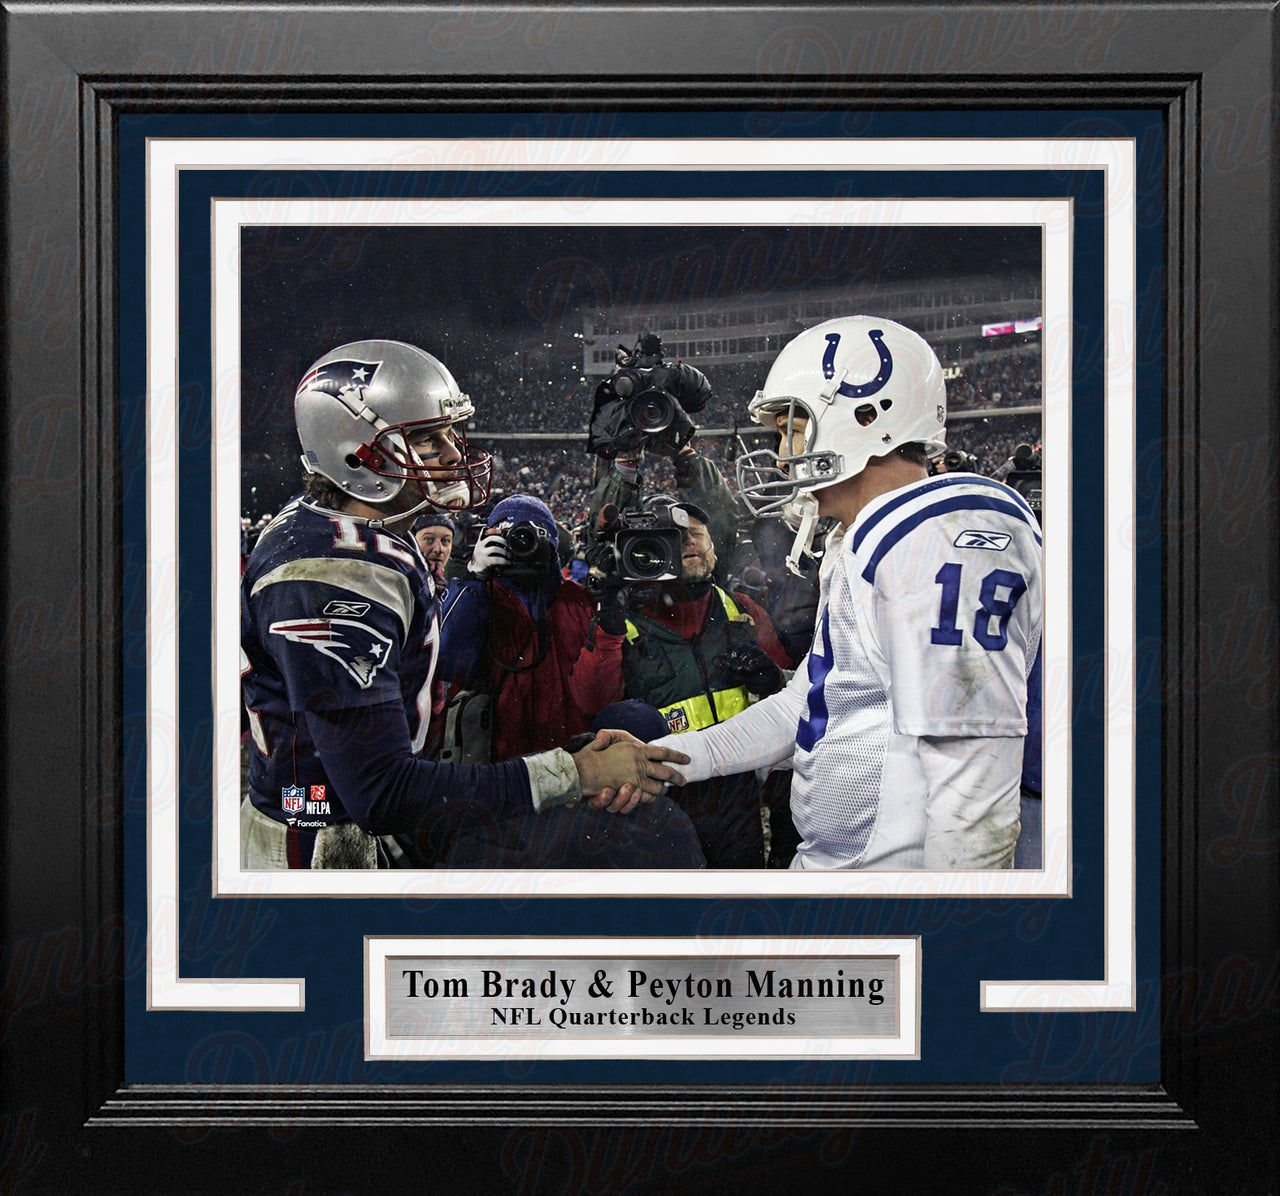 Tom Brady and Peyton Manning 8" x 10" Quarterback Legends Framed Football Photo - Dynasty Sports & Framing 